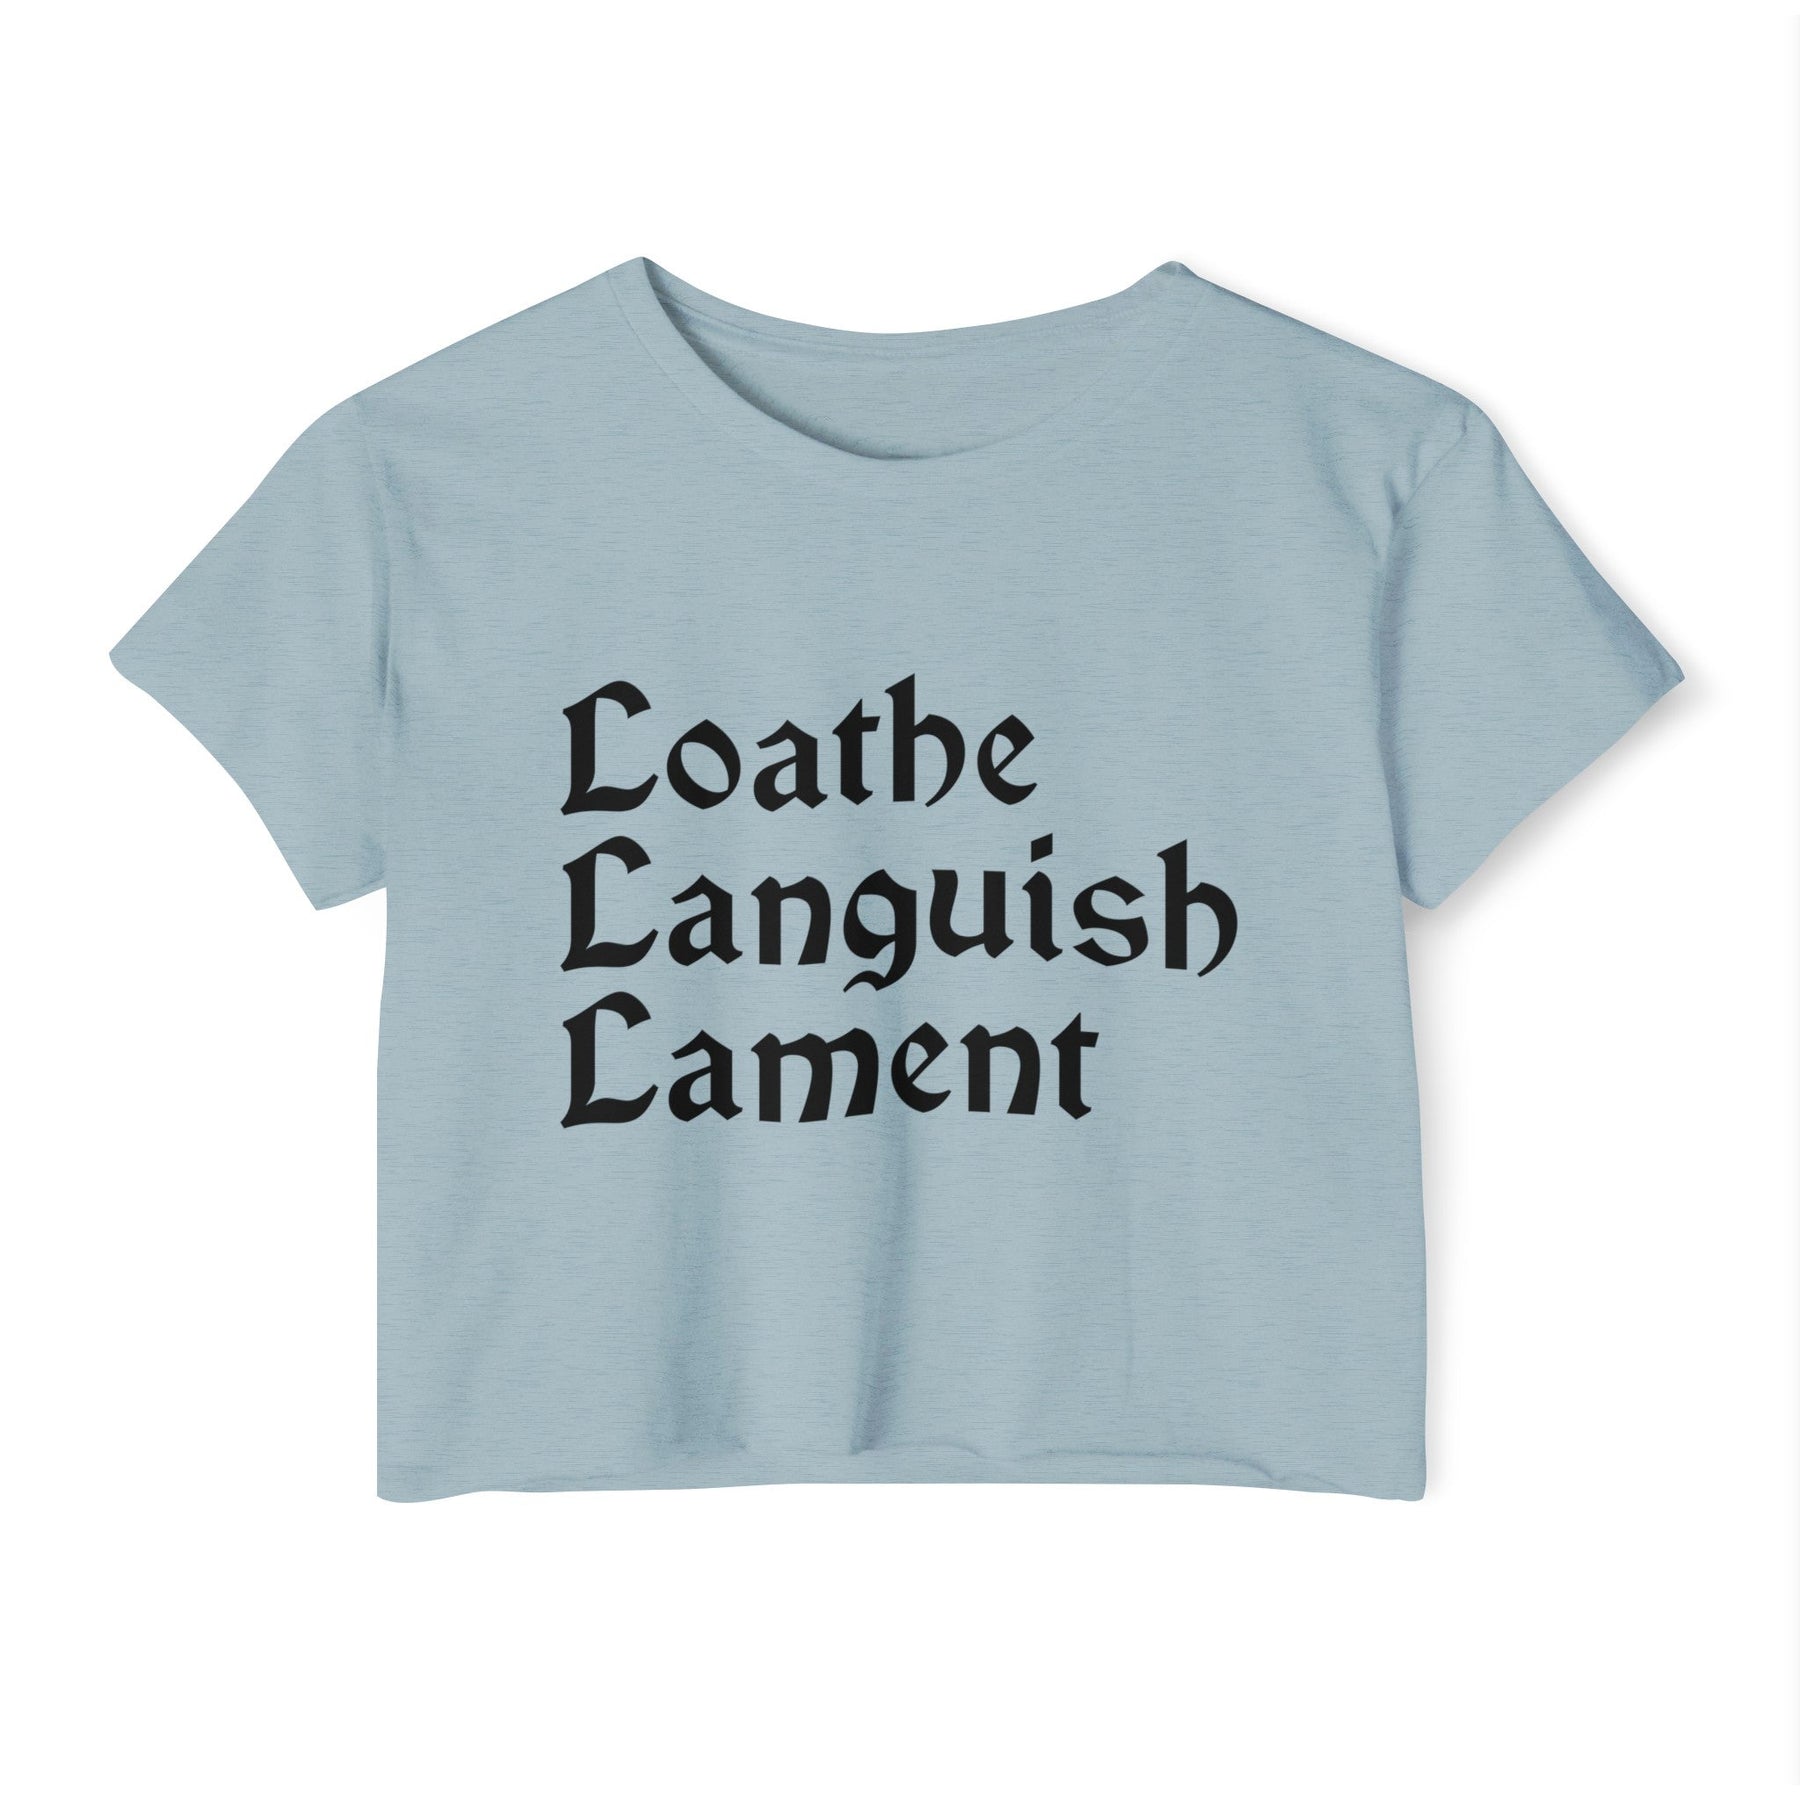 Loathe Languish Lament Stacked Women's Lightweight Crop Top - Goth Cloth Co.T - Shirt19571980371807335090